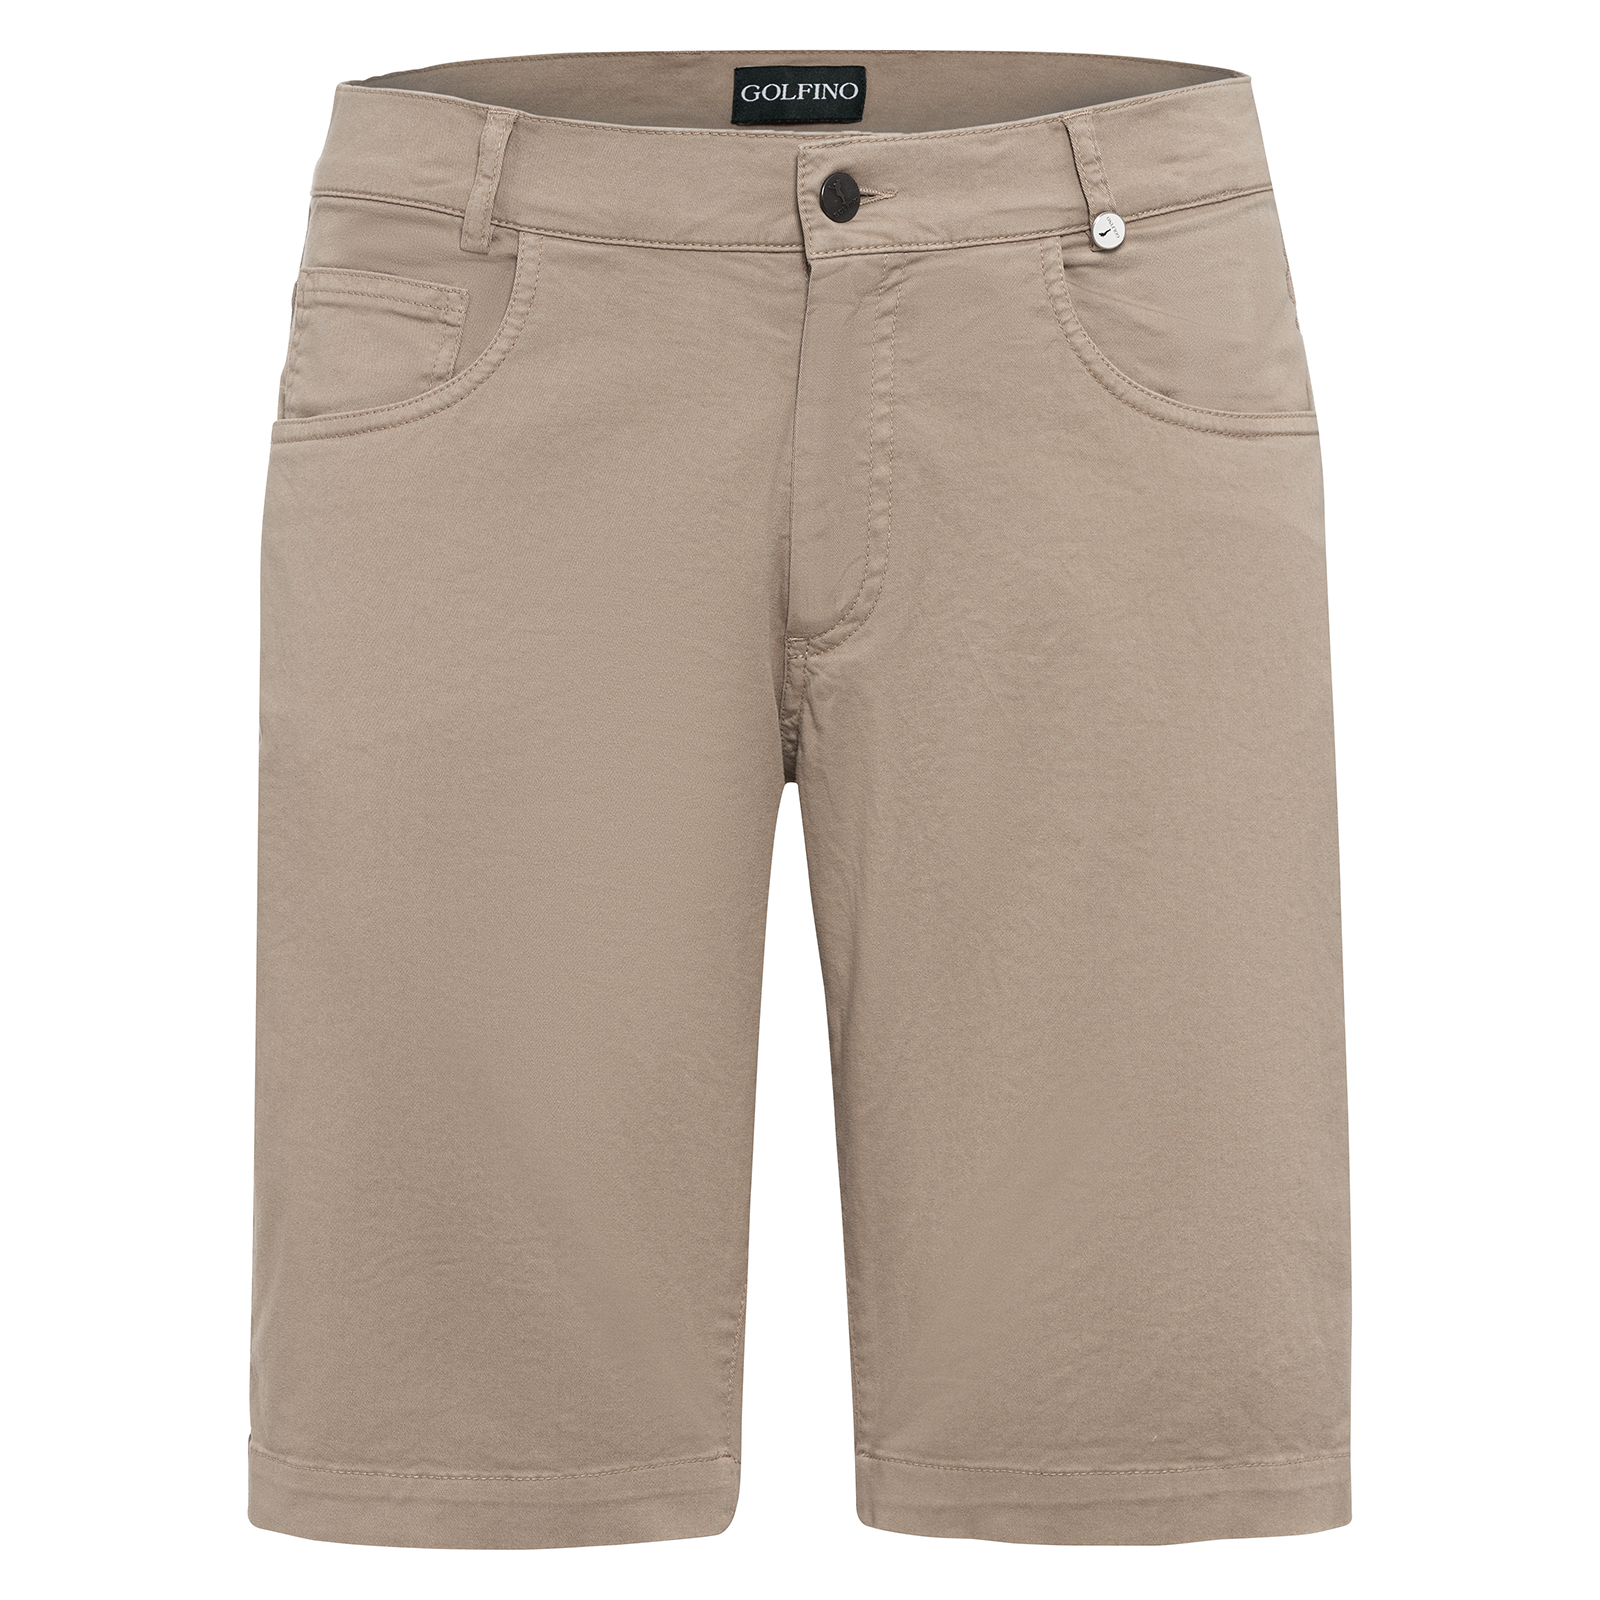 Men's Cotton Bermuda in practical 5-pocket style